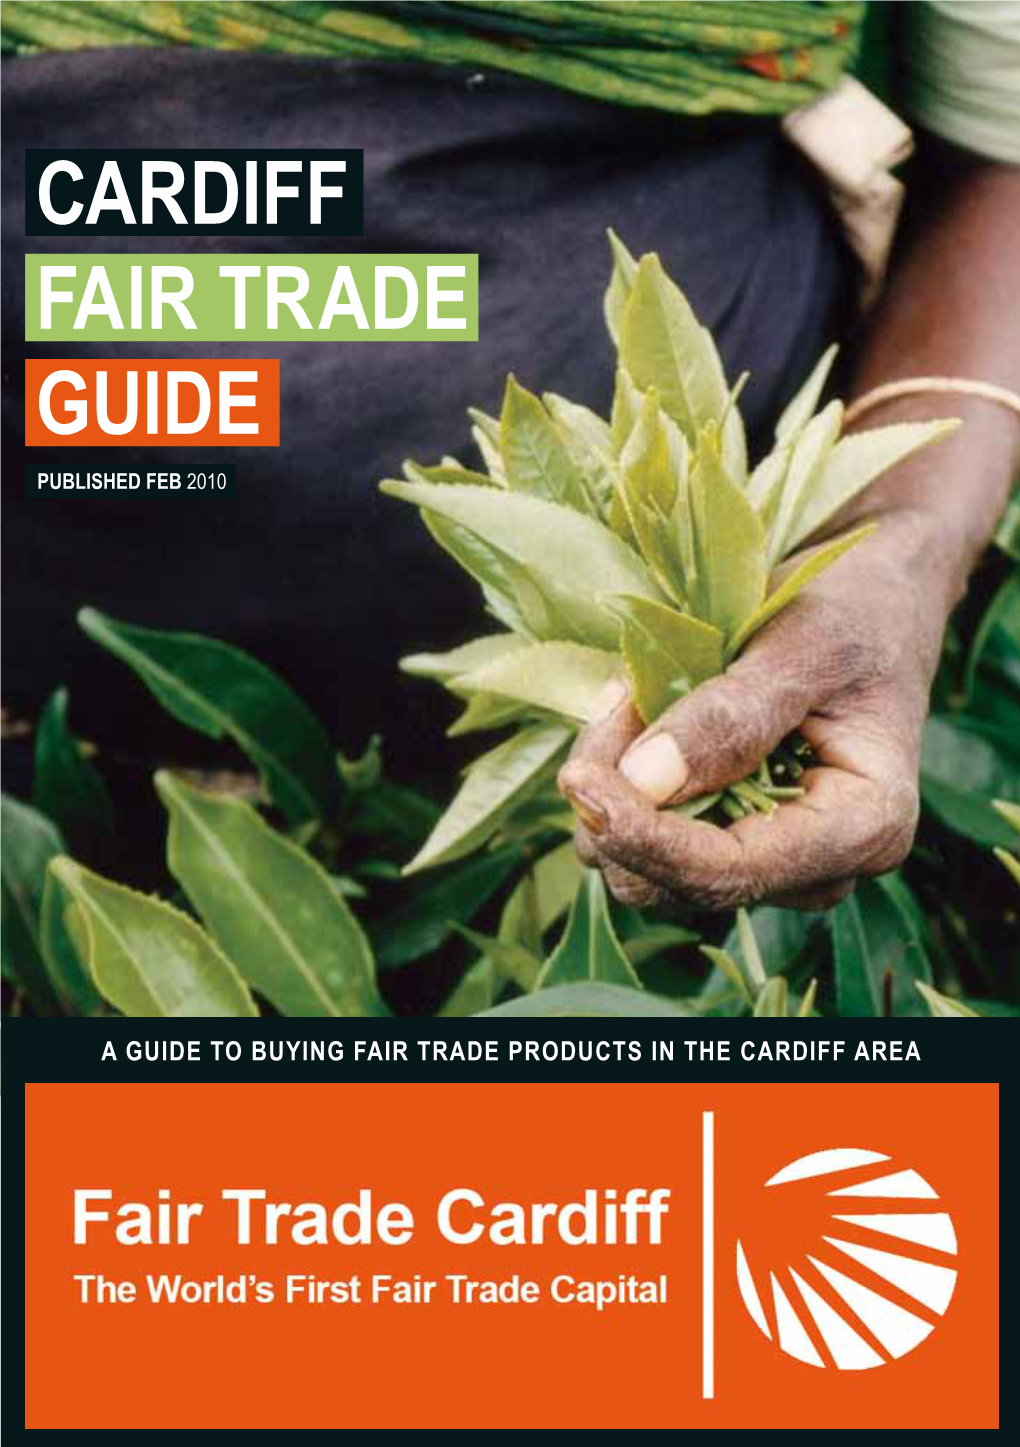 Cardiff Fair Trade Guide Published Feb 2010